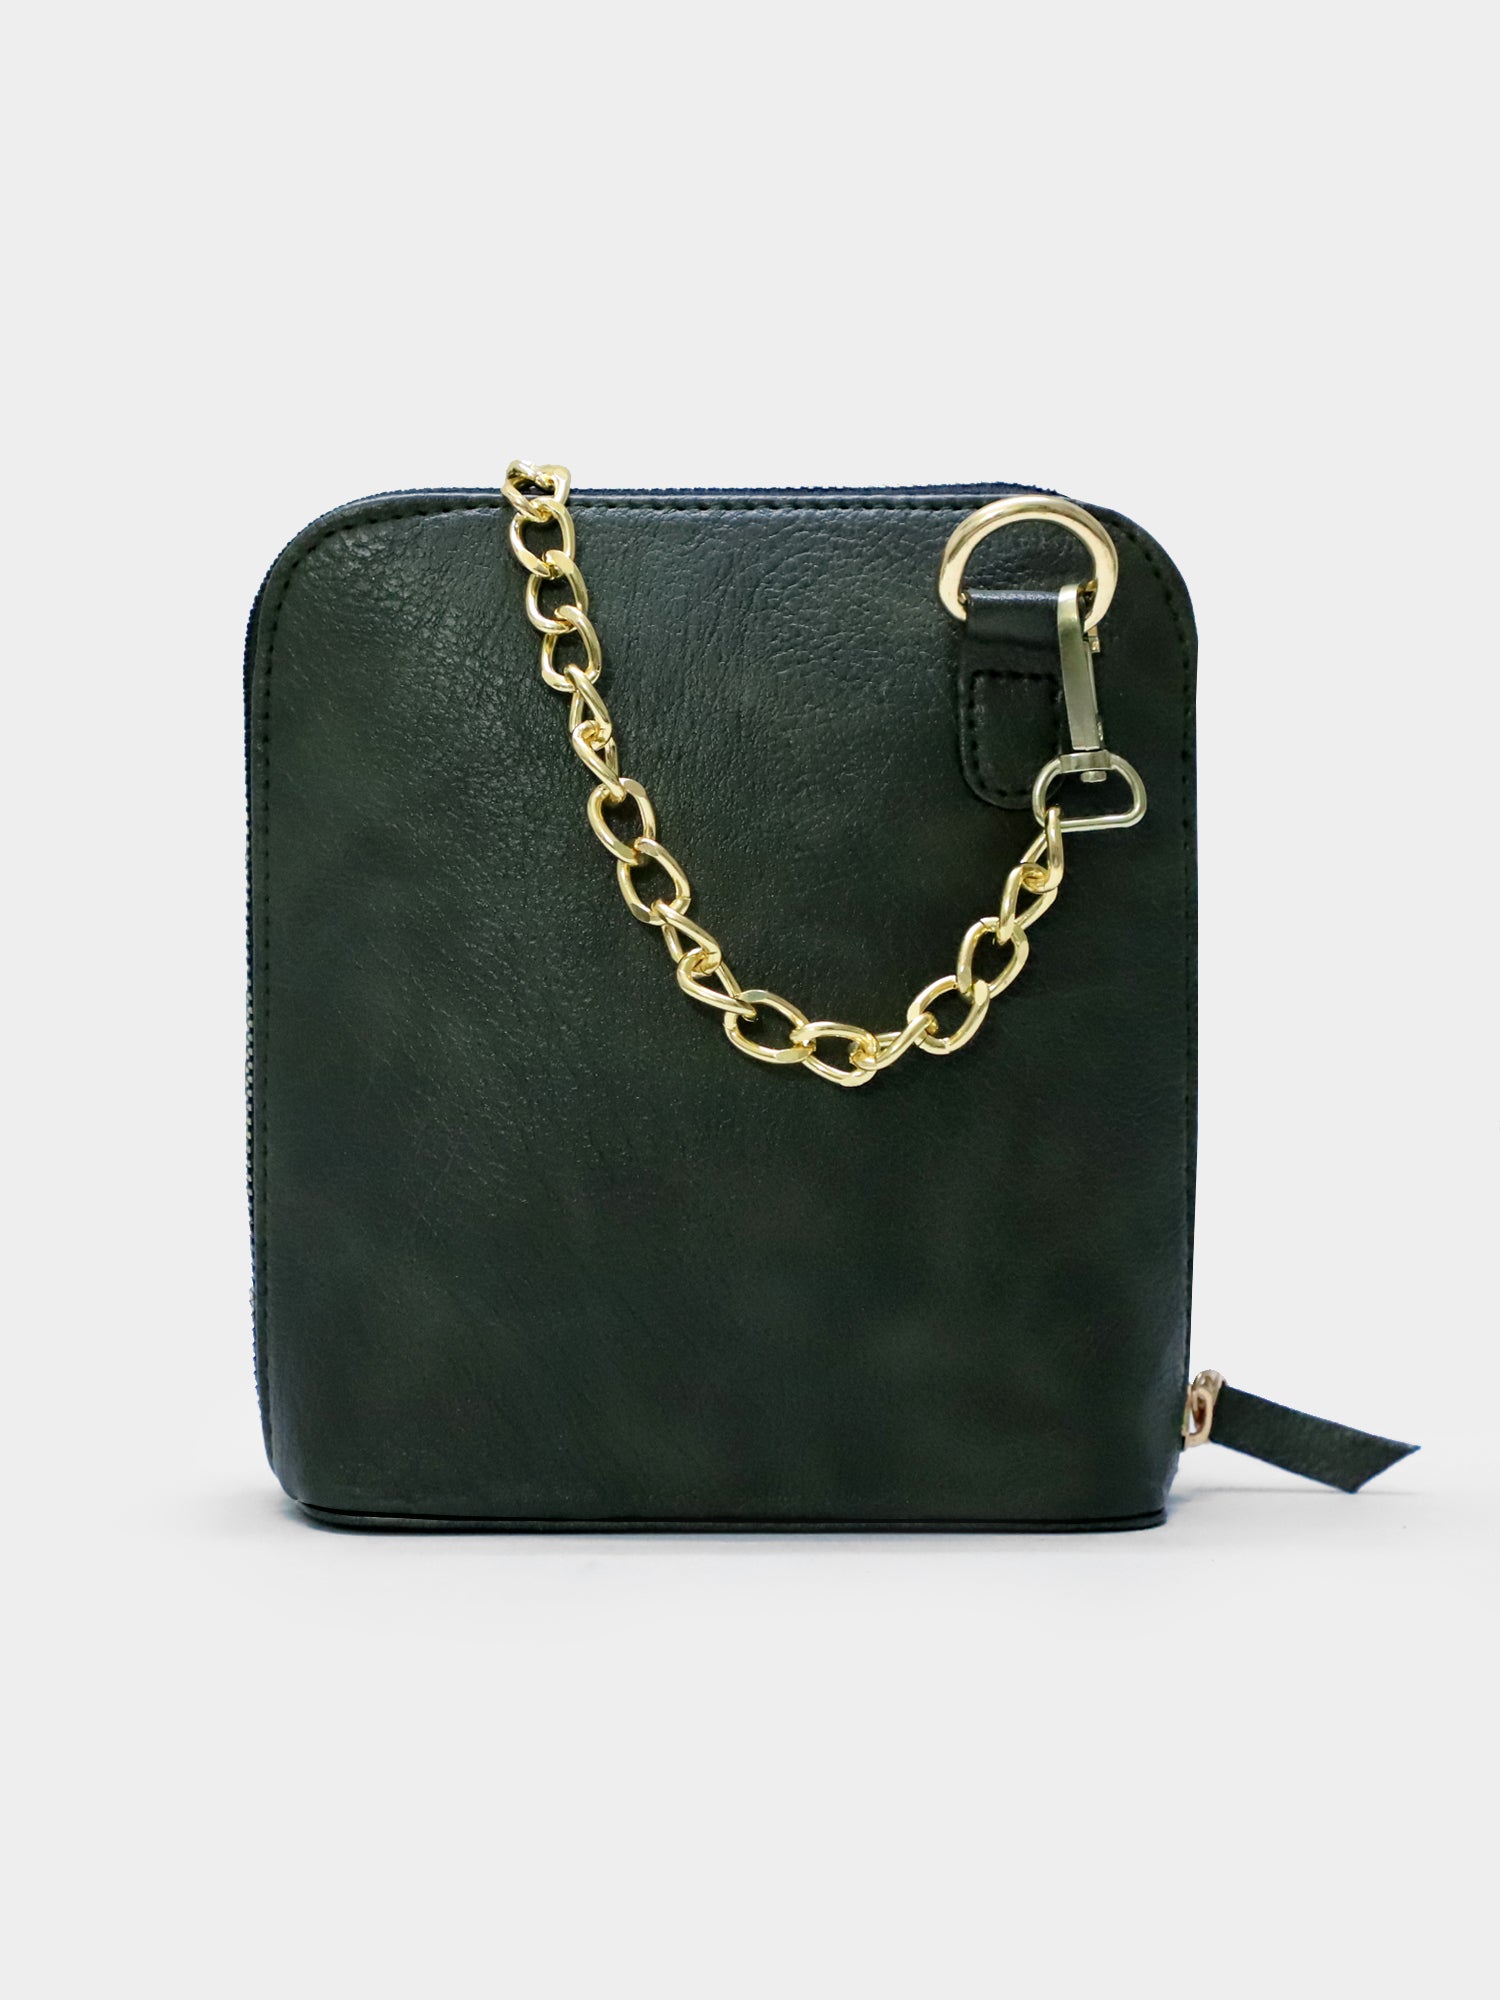 Buy Green Mini Sling Bags Online in India